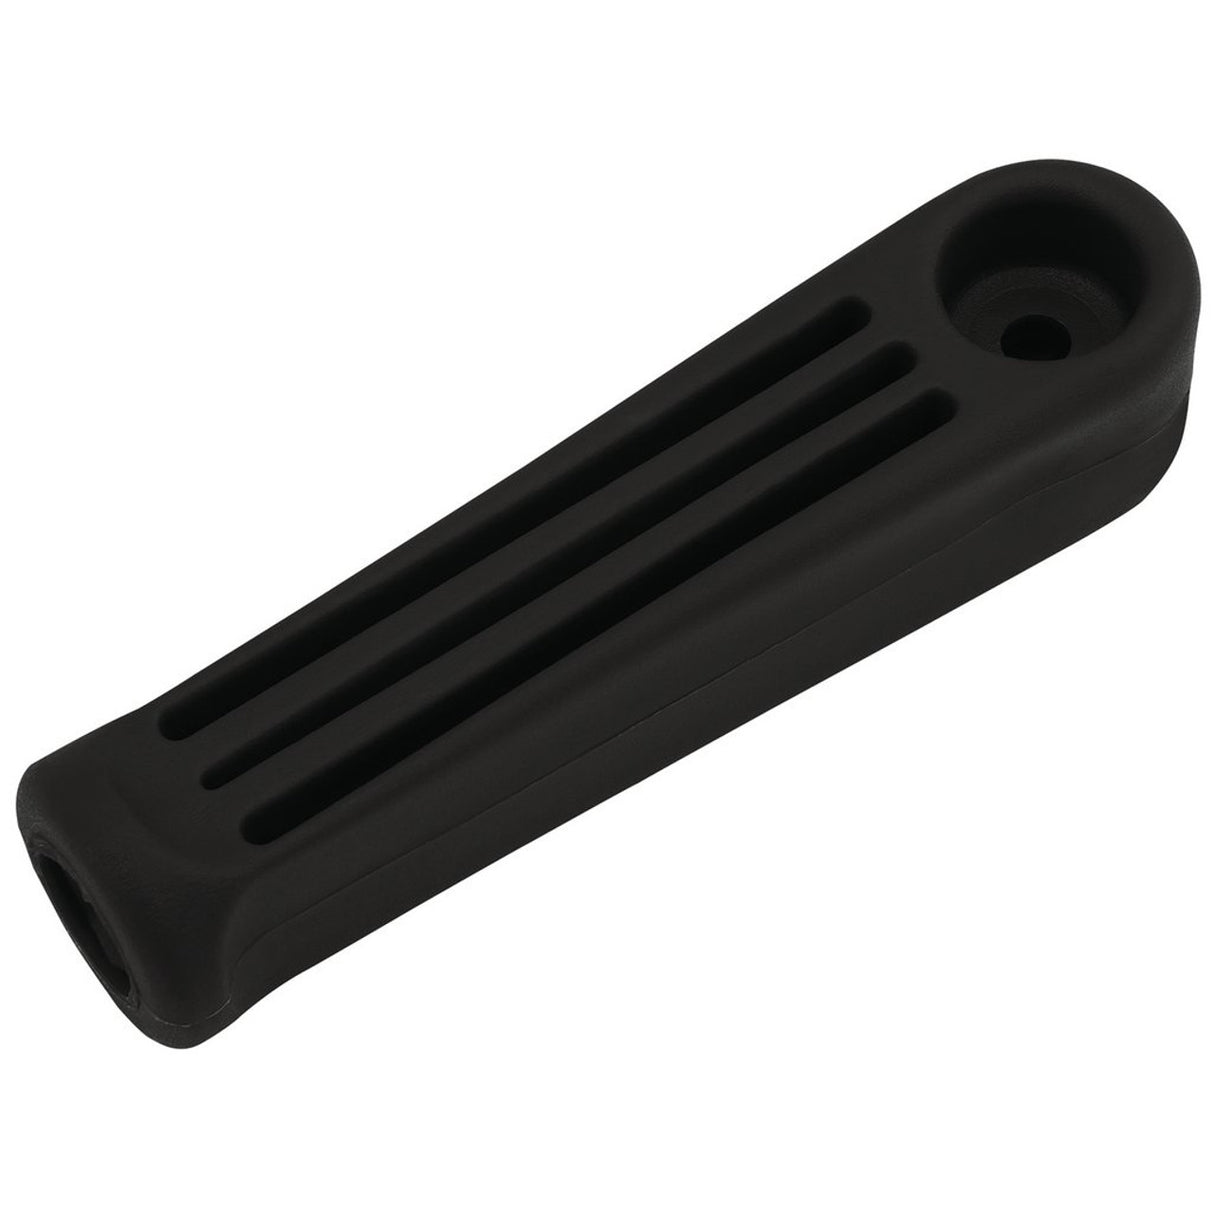 Draper Tools Plastic File Handle, 110mm, Black